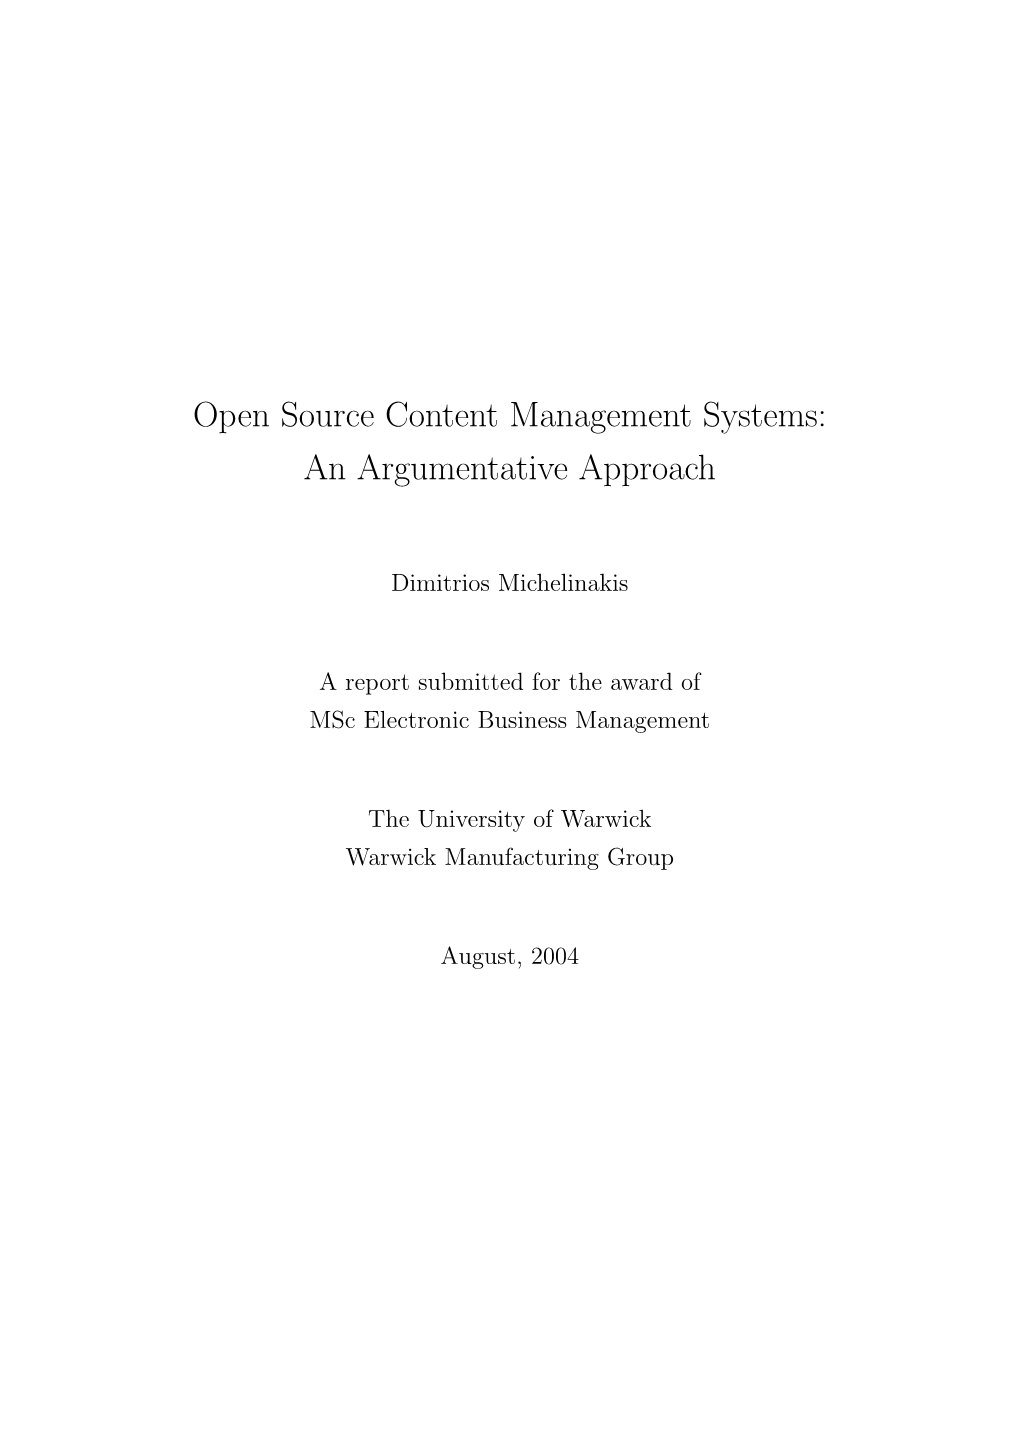 Open Source Content Management Systems: an Argumentative Approach